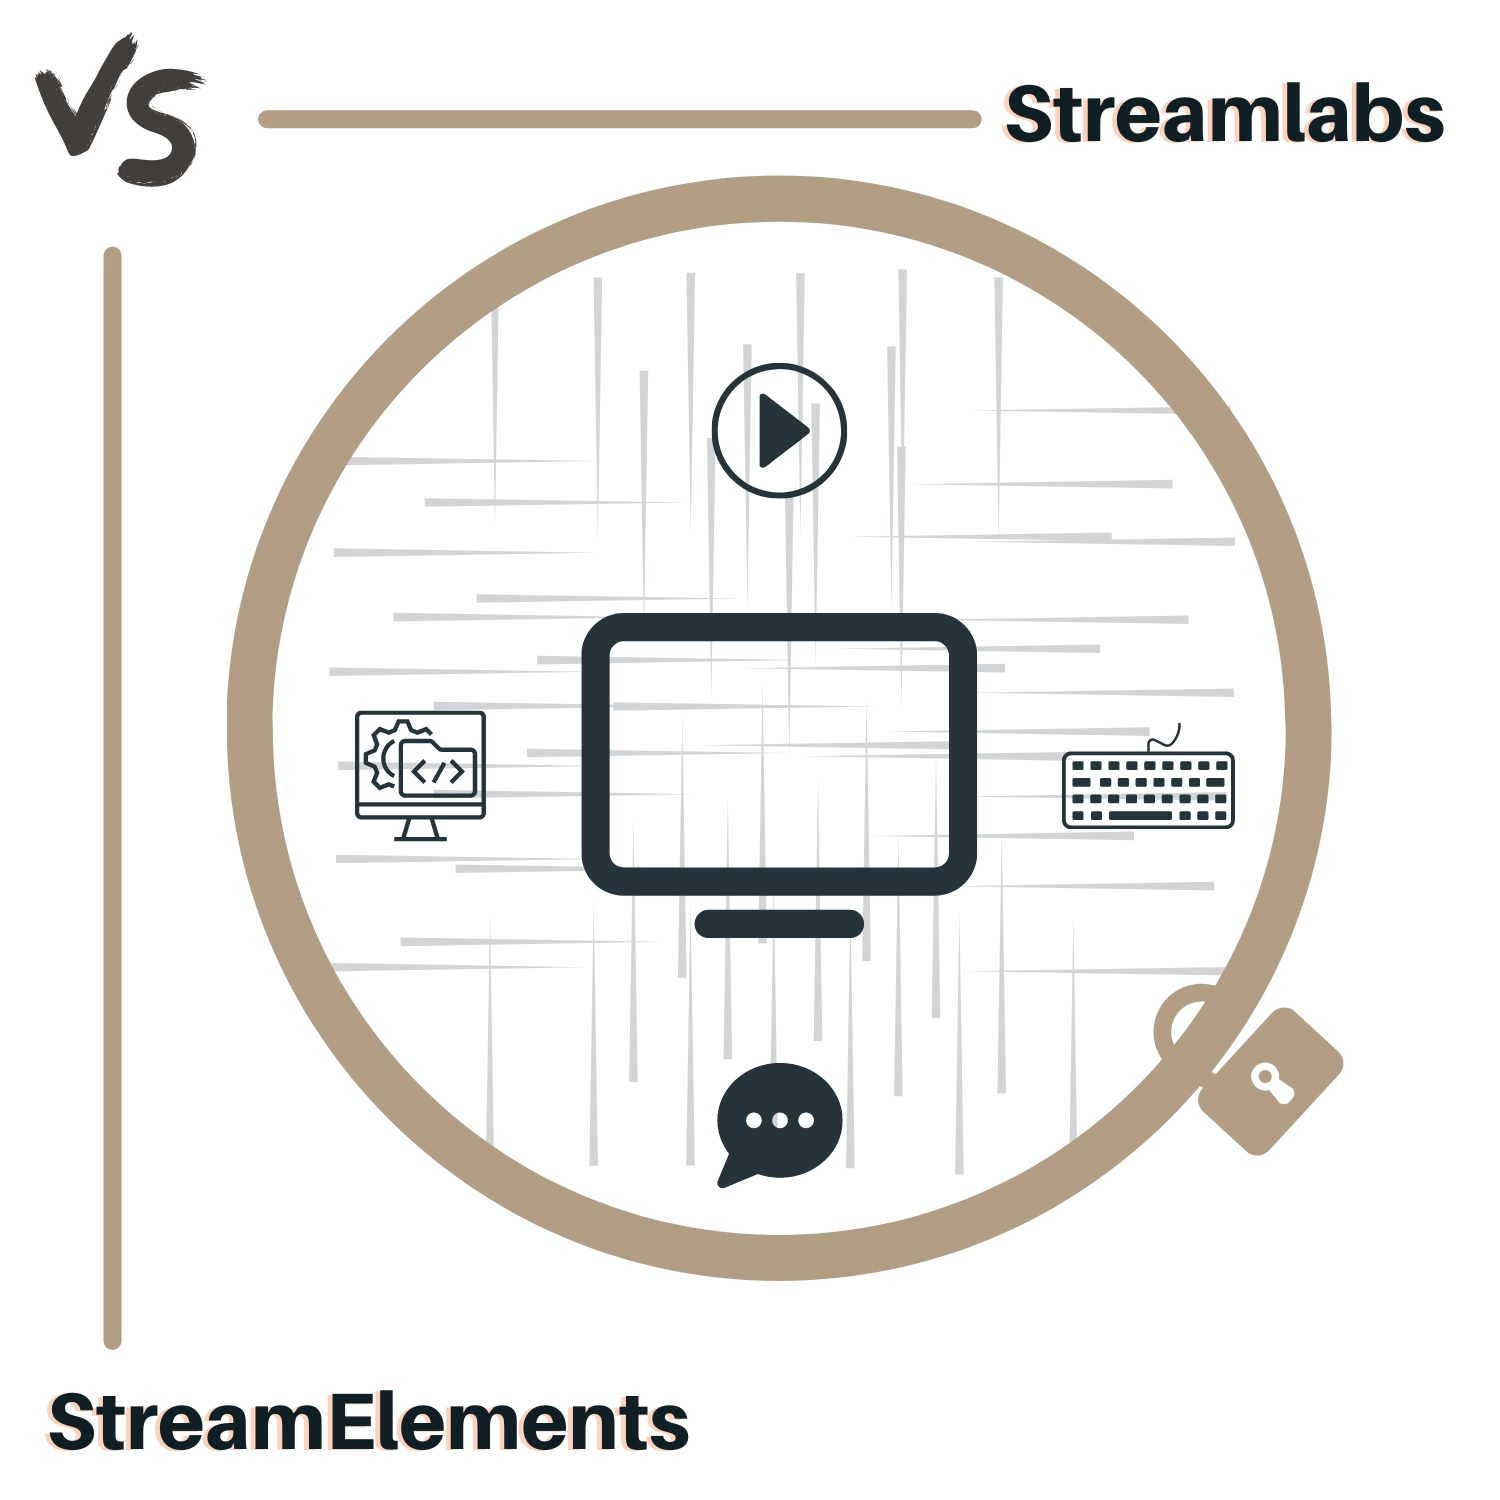 Streamlabs vs. StreamElements